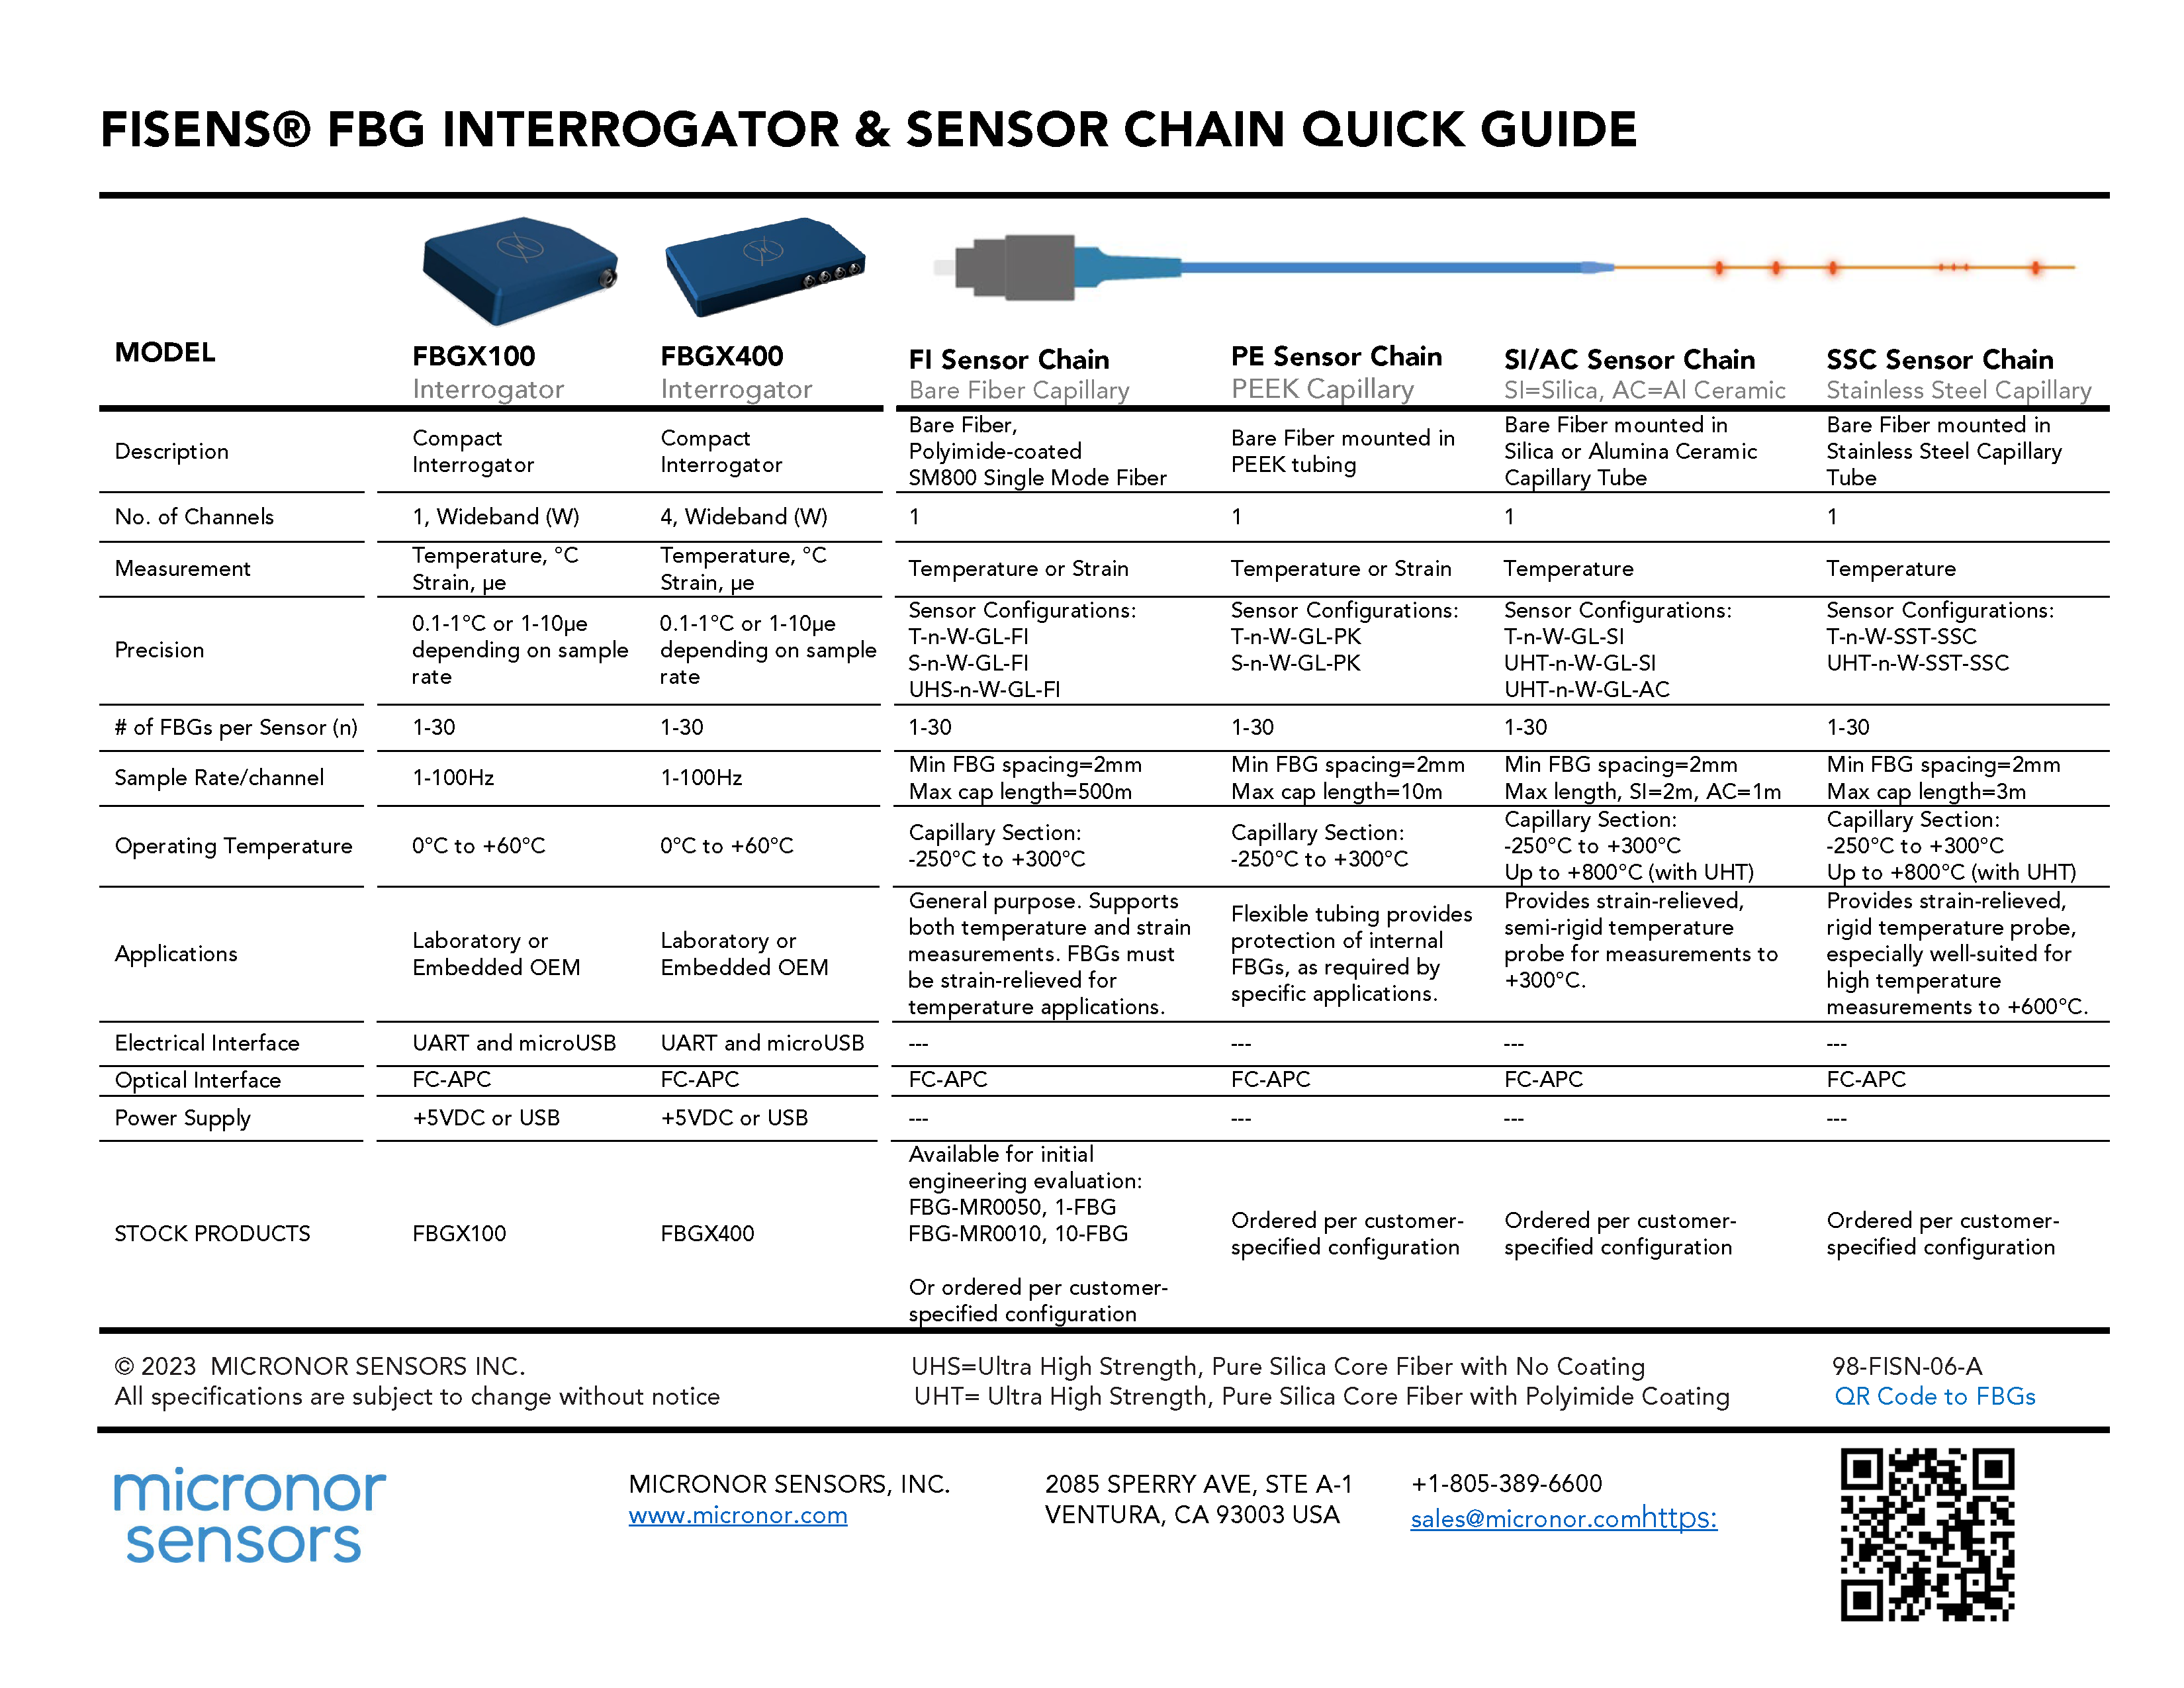 FBG Interrogator and Sensors Chain Quick Guide